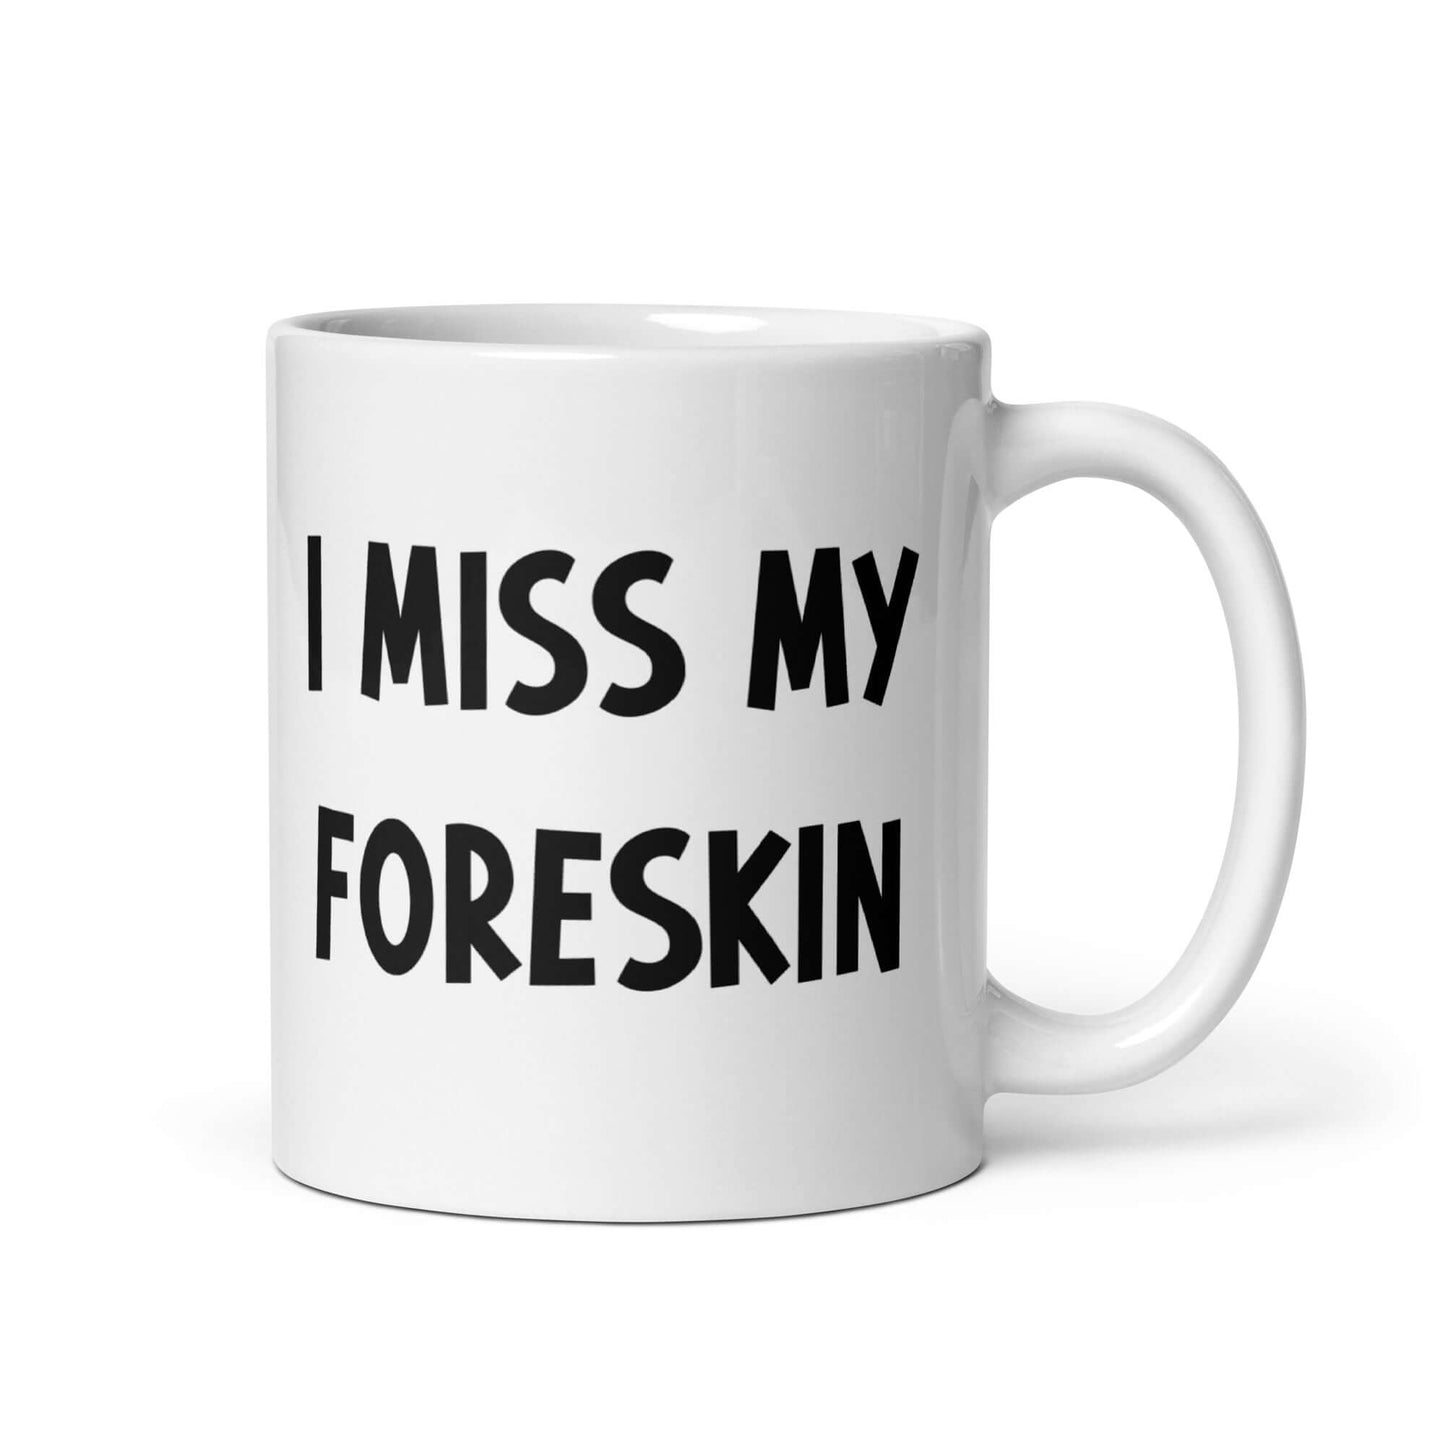 I miss my foreskin ceramic coffee mug